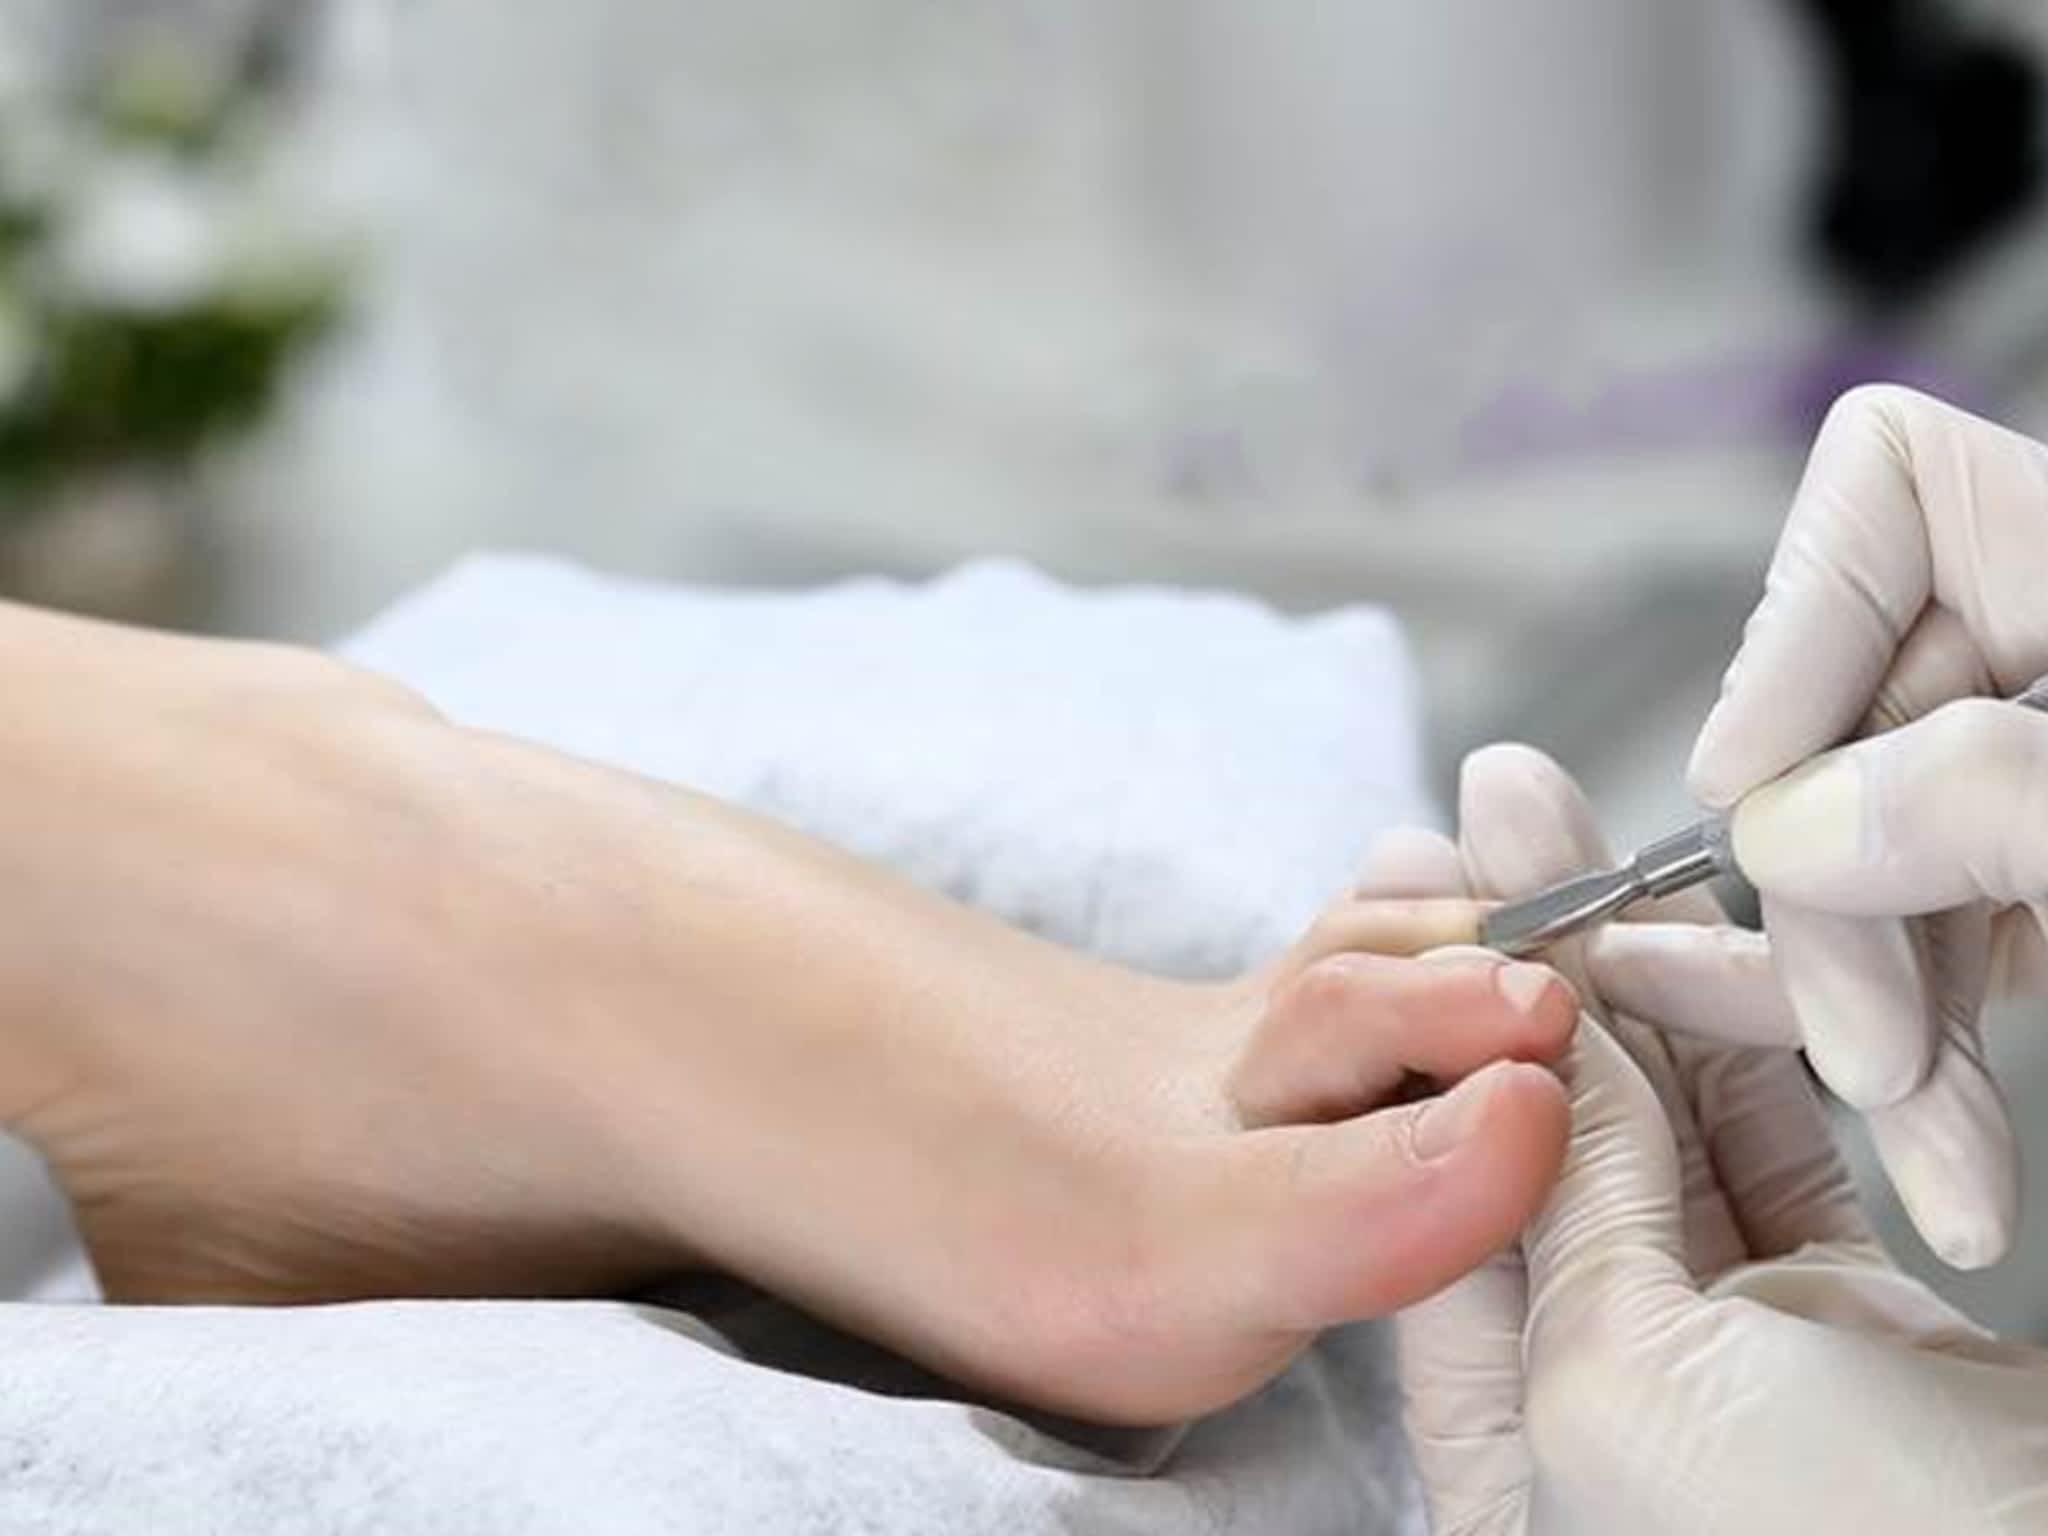 photo Clinik Podologik | Podologie, Soin de pieds et ongles à Sherbrooke